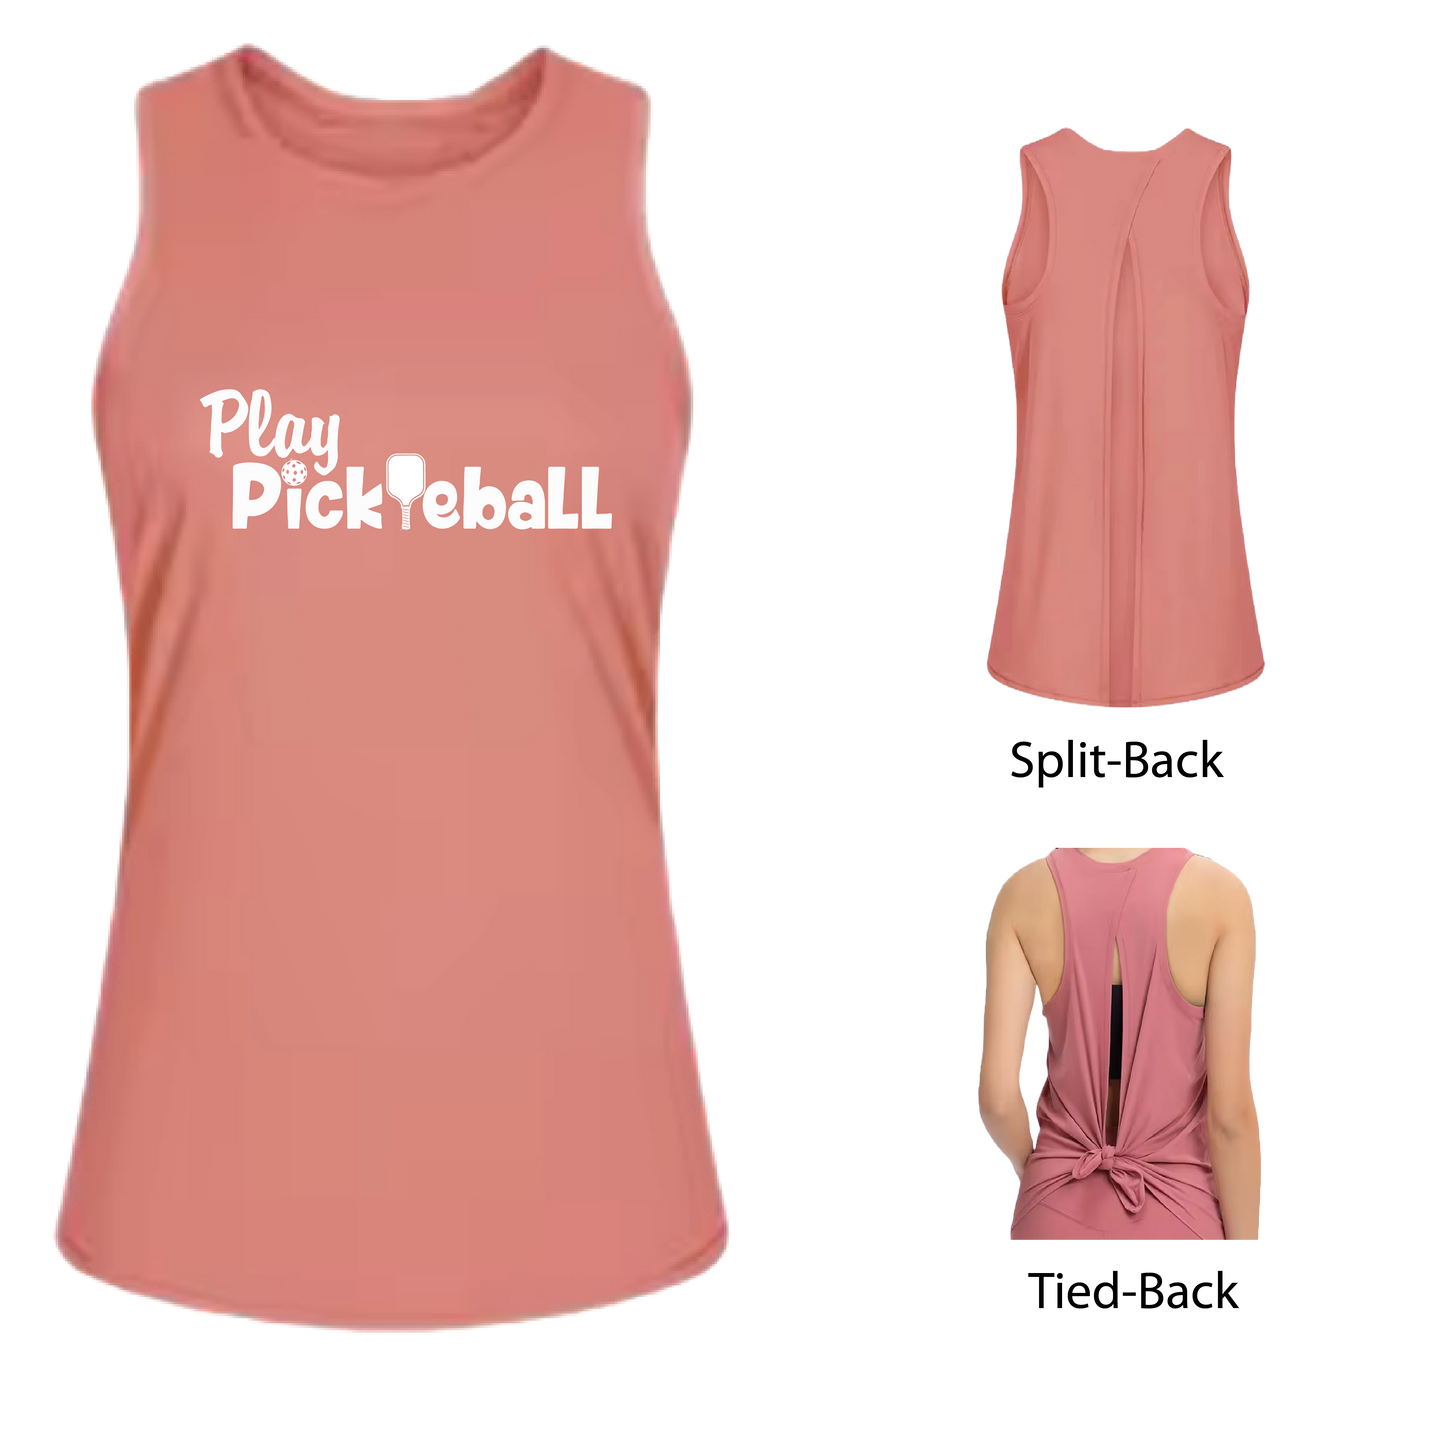 Play Pickleball | Women's Split Back or Tied Back Pickleball Tank | 80/20 Nylon Spandex Mix